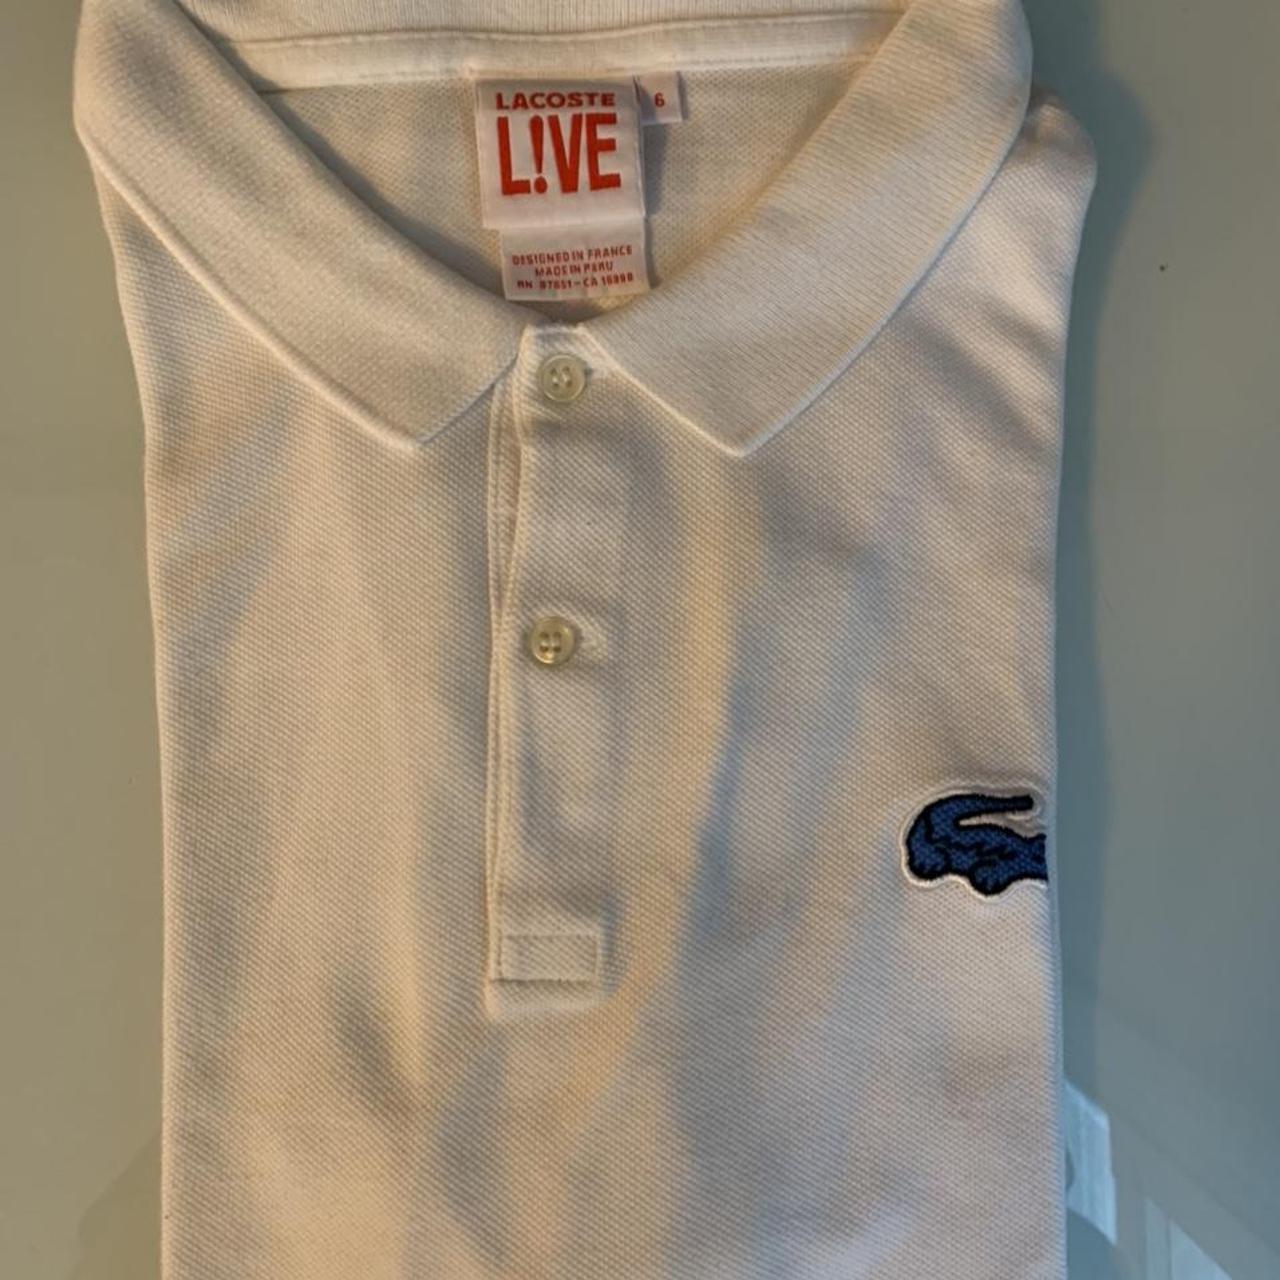 Lacoste Live Men's White Polo-shirts (3)